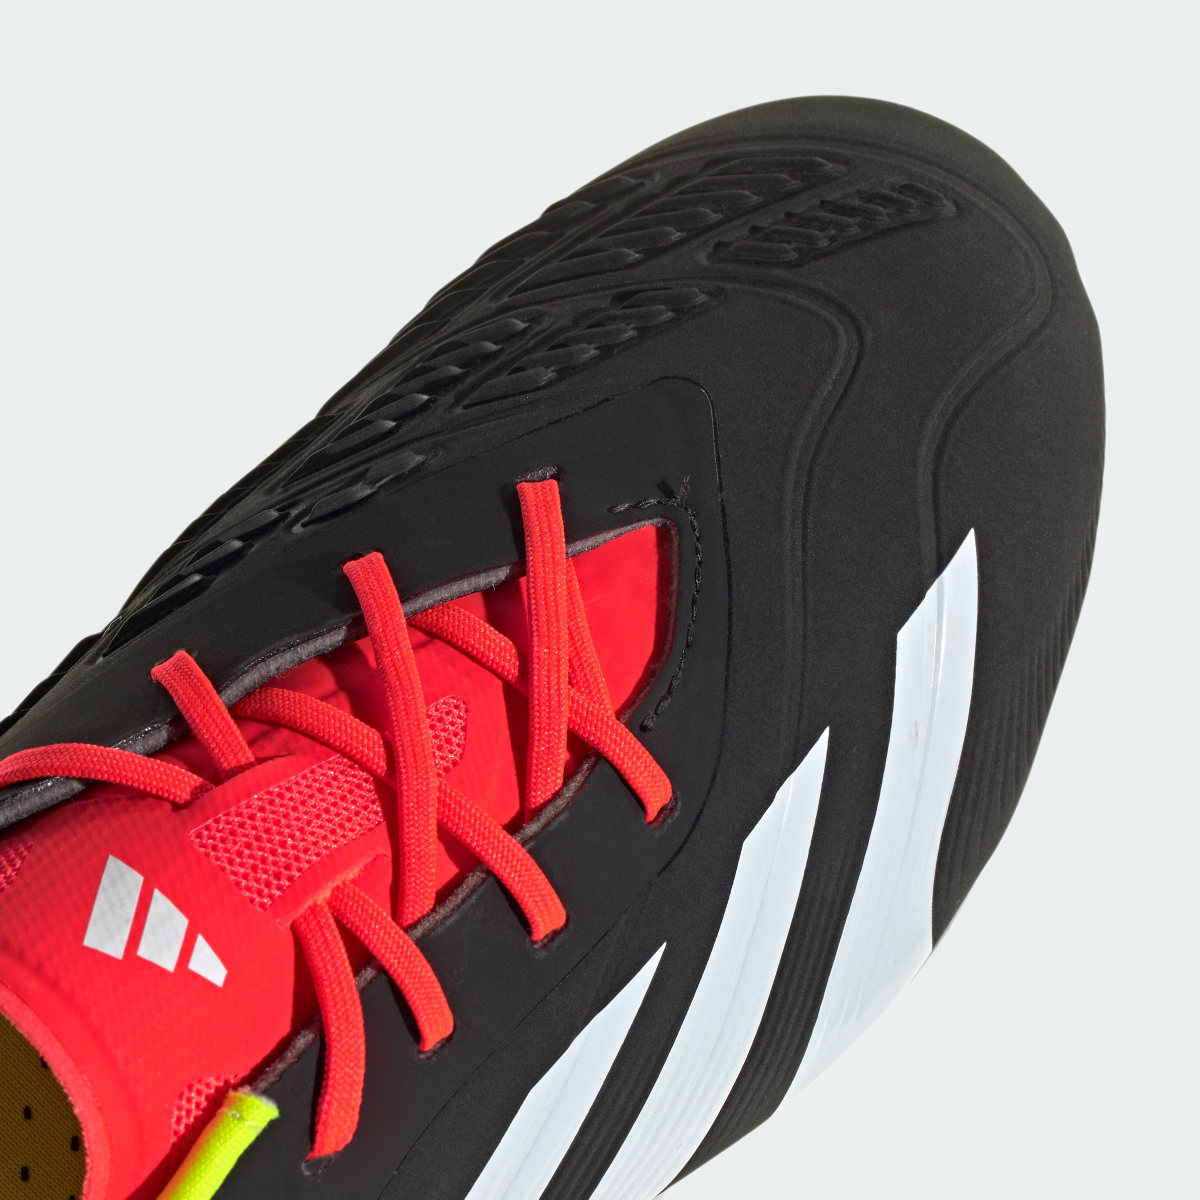 Adidas Predator Elite Firm Ground Football Boots. 10